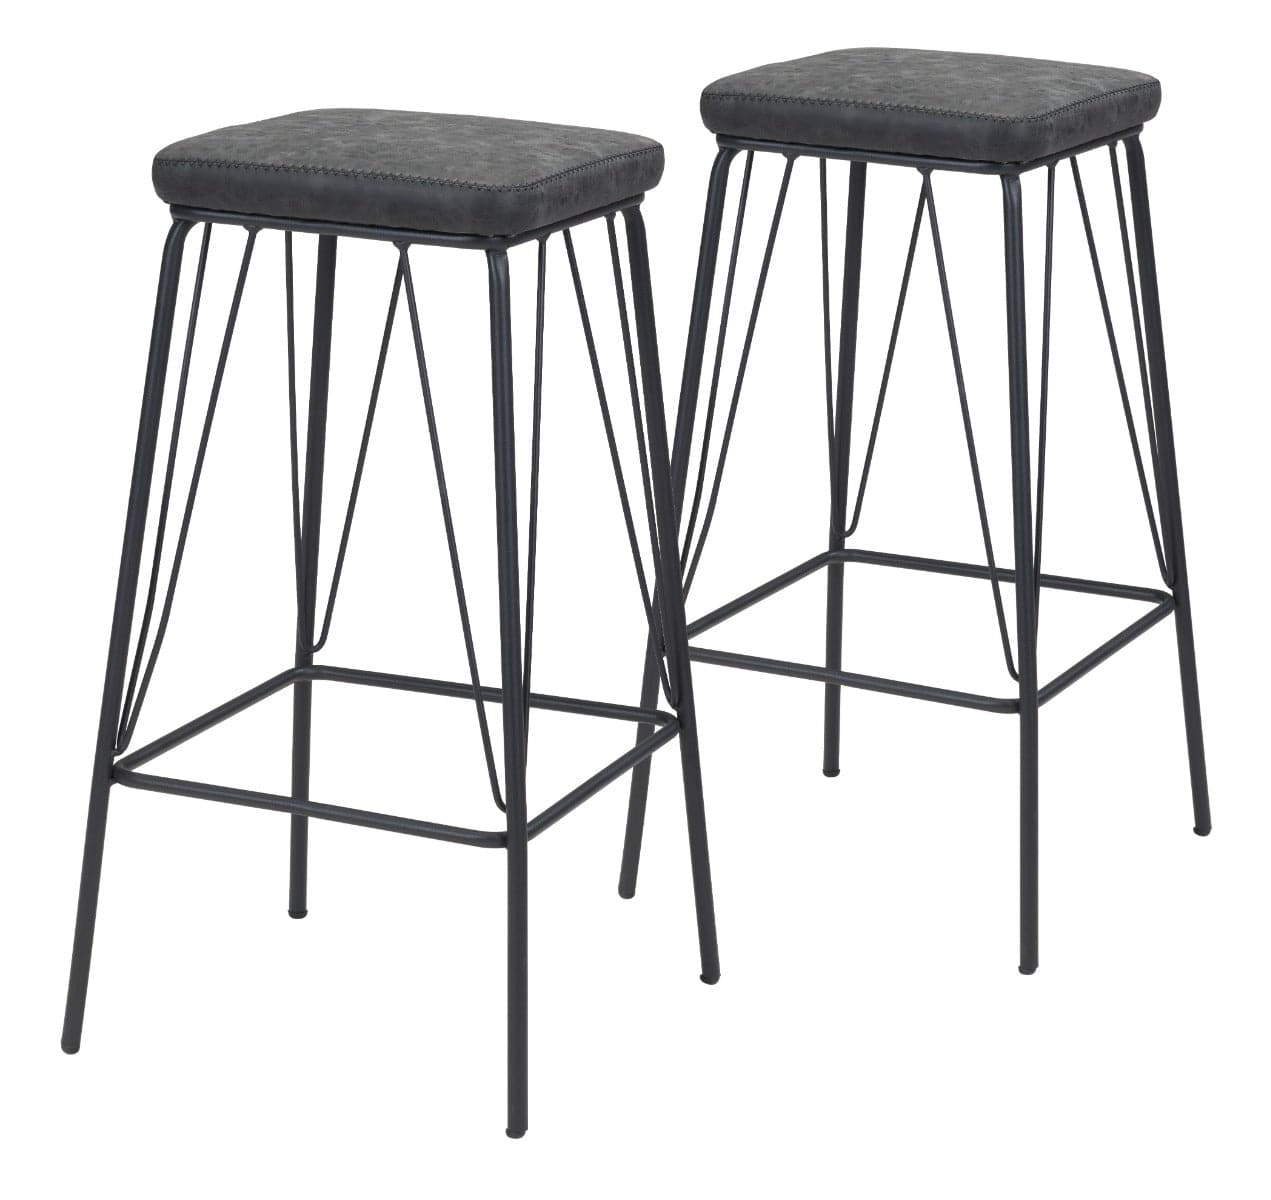 Set of 2 black bar chairs